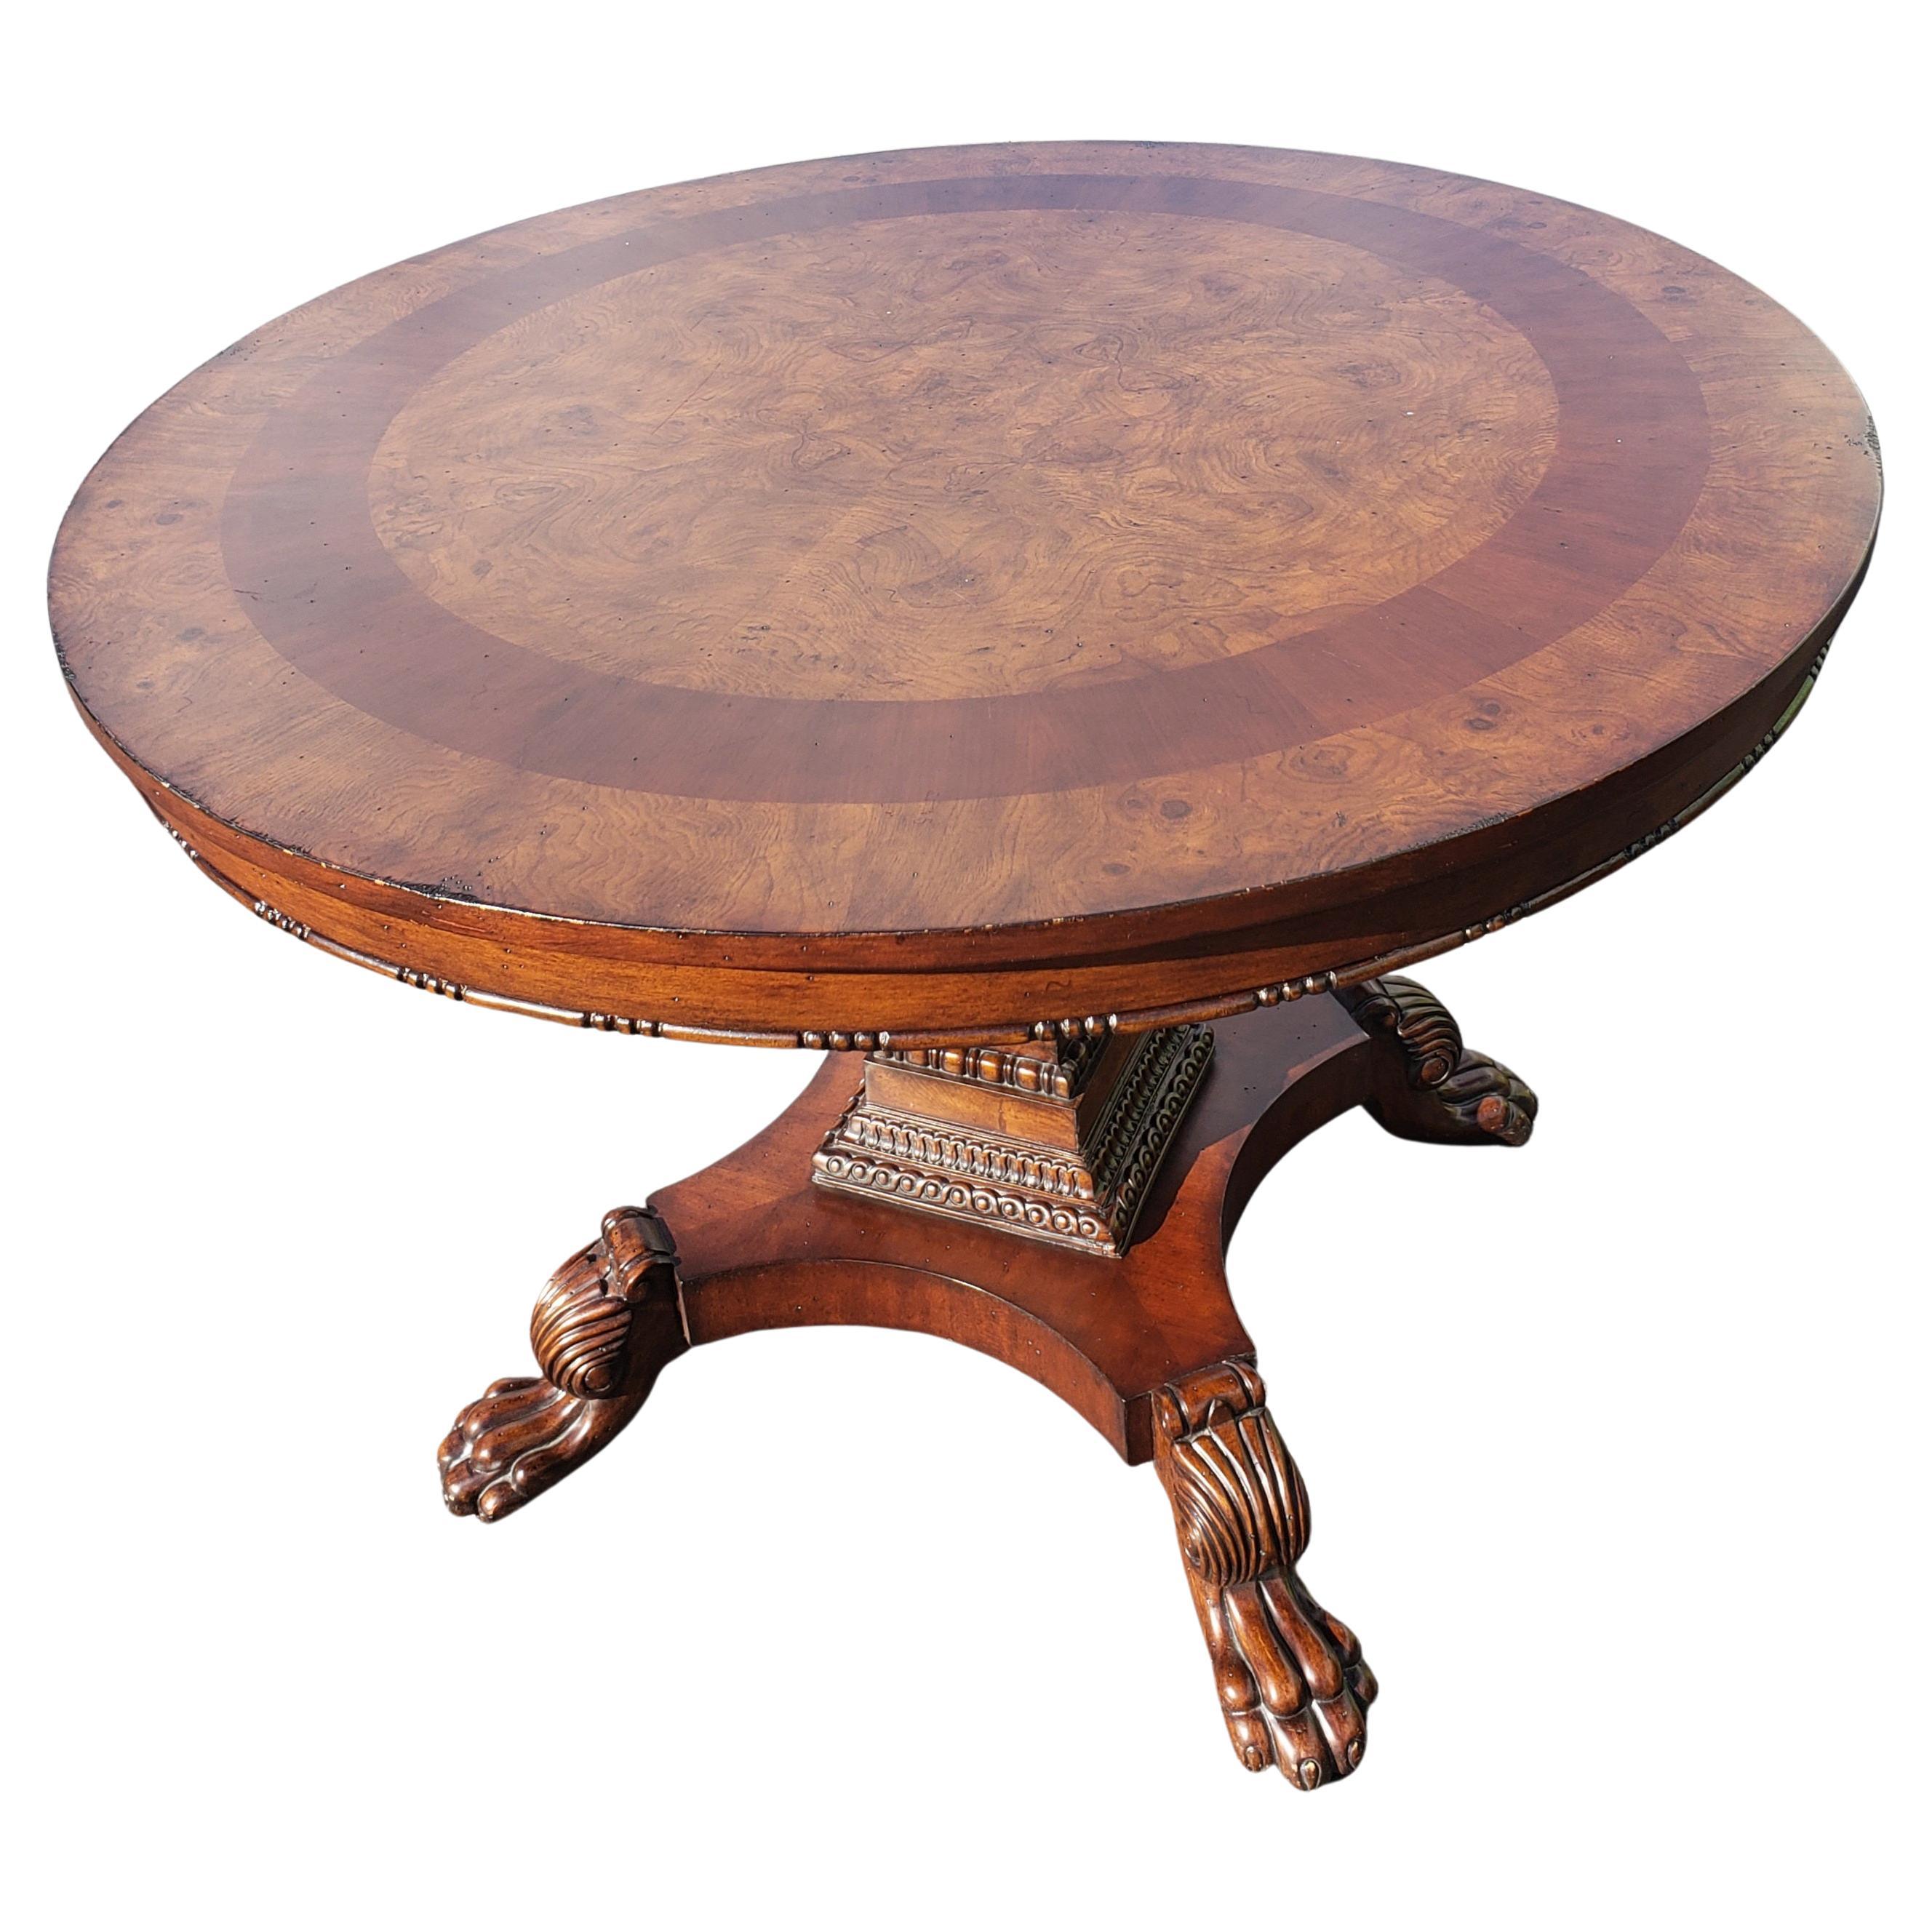 Baroque Revival Banded Burl Walnut Distressed Center Table with Veneered Quad Part Pedestal Base